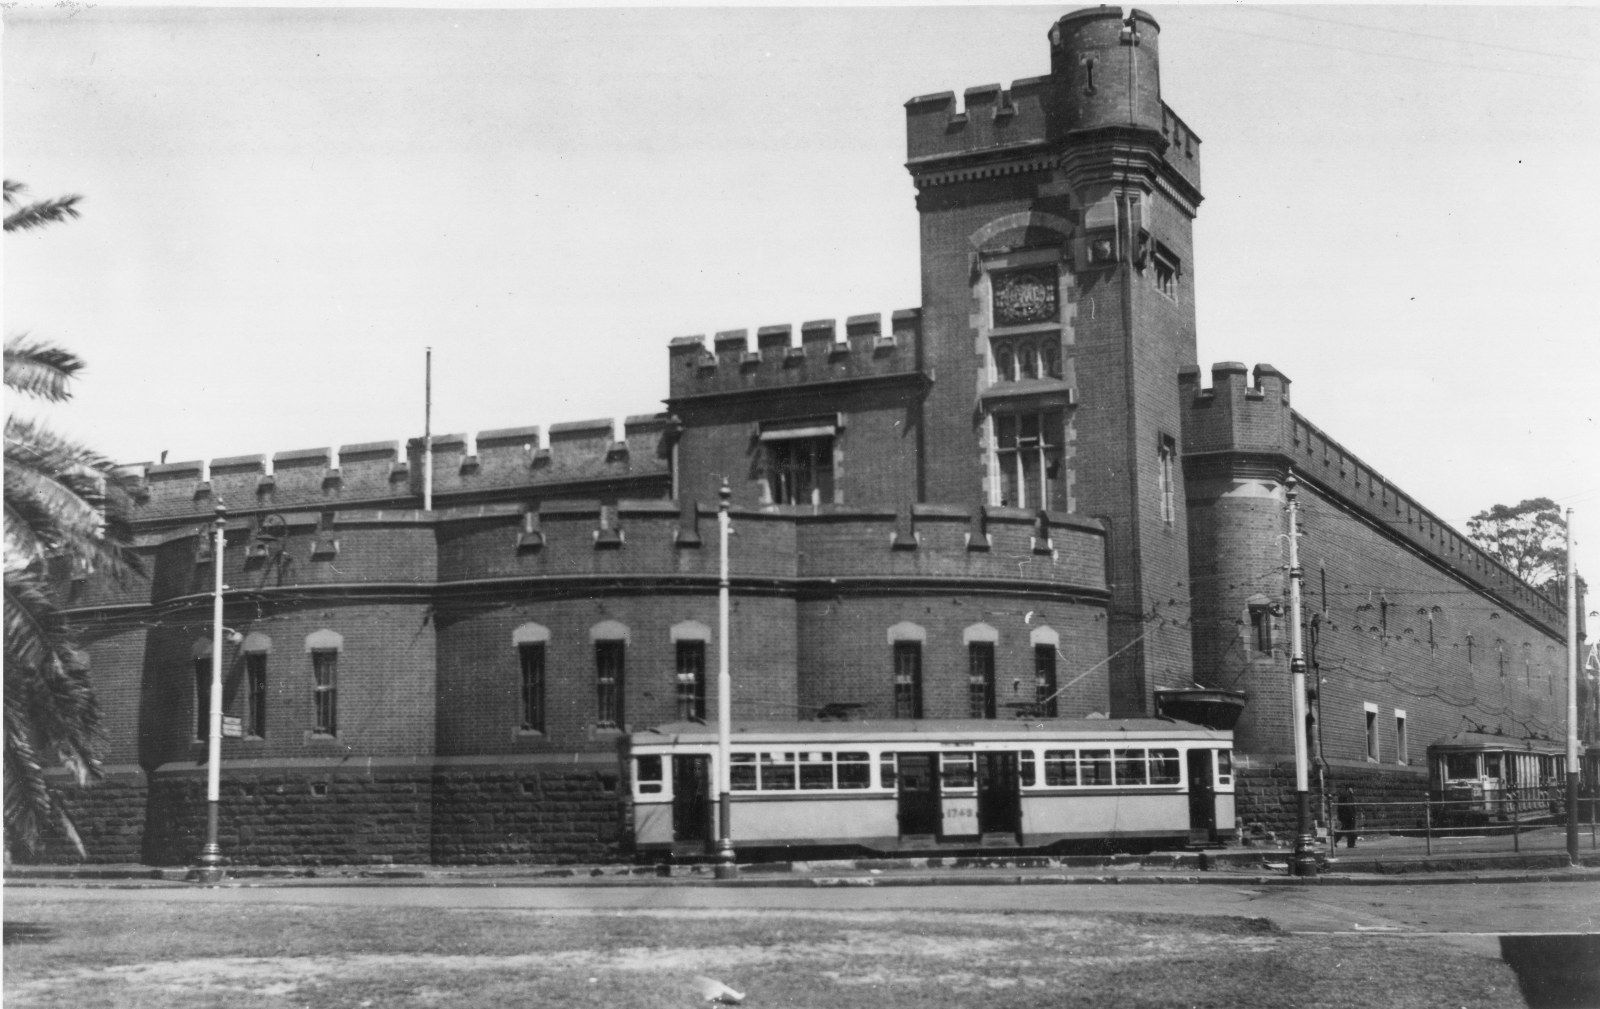 Fort Macquarie tram depot, rear view